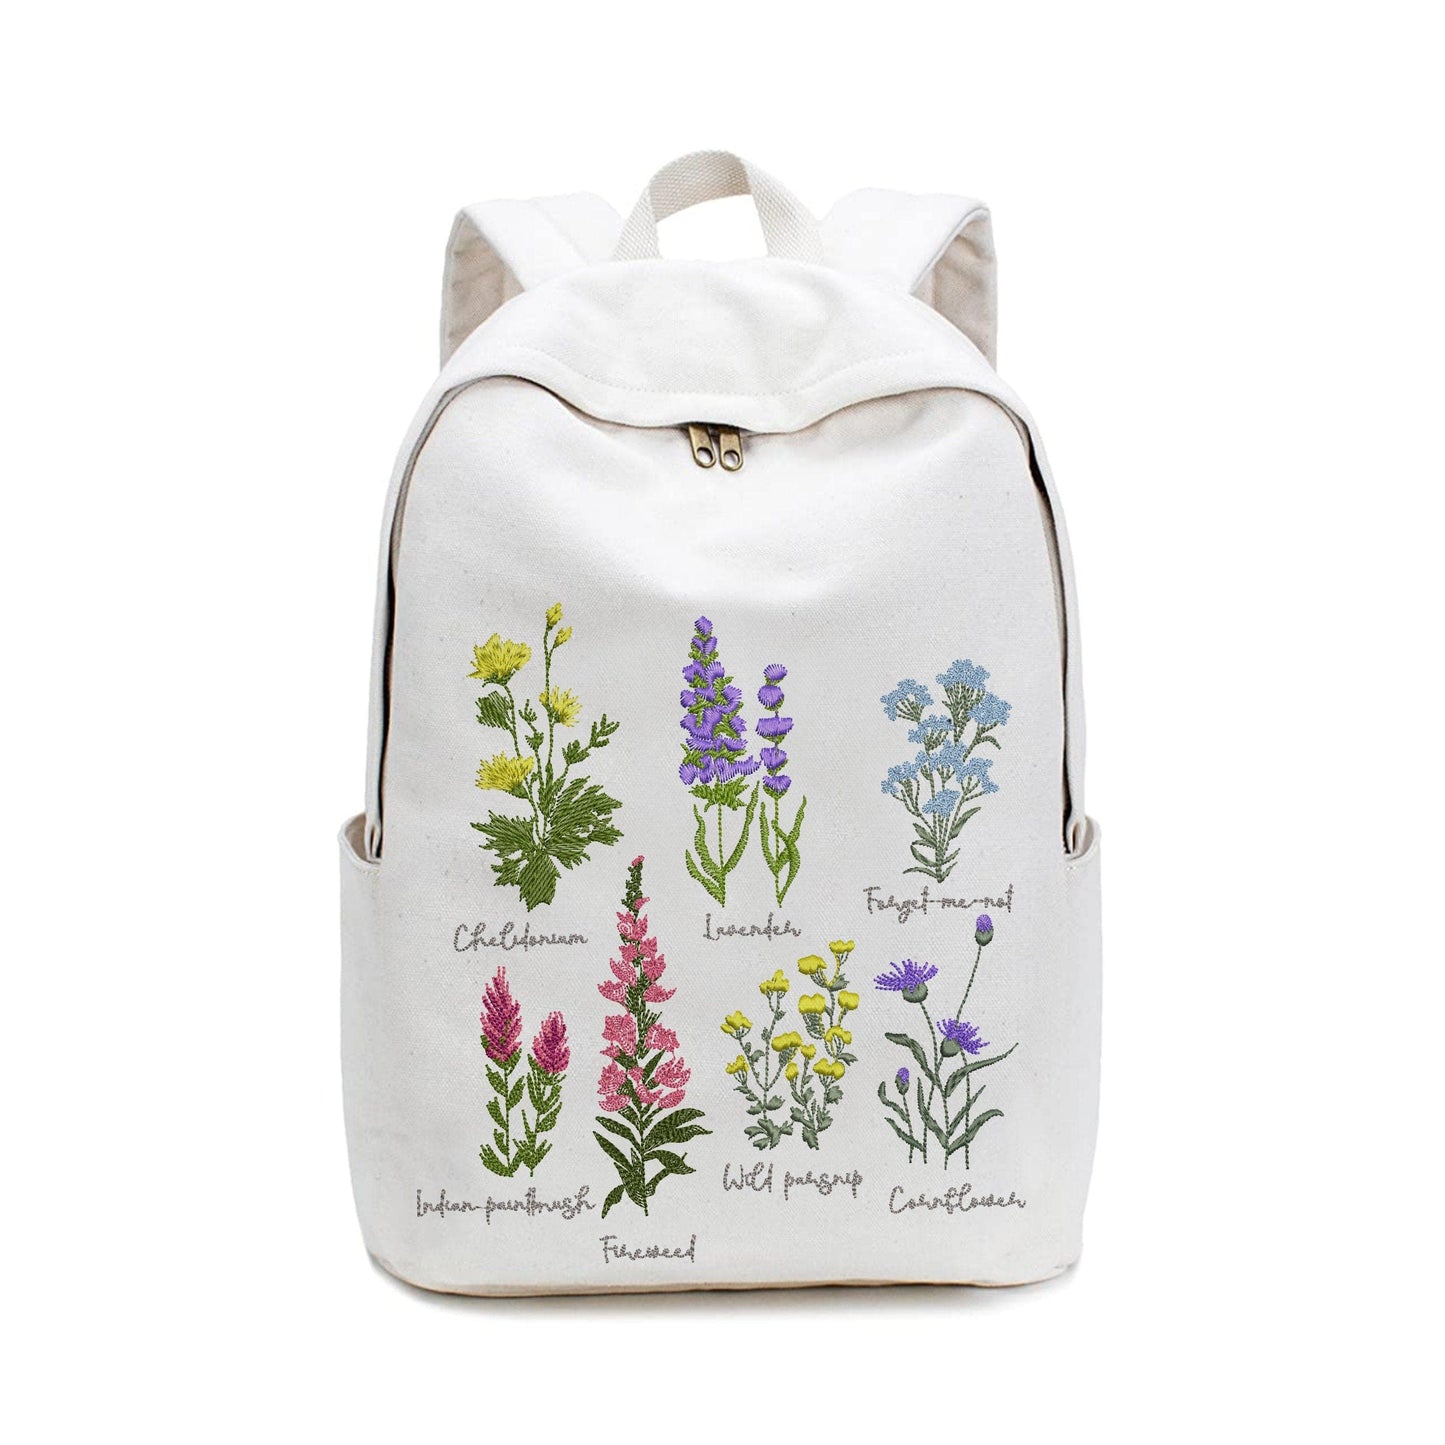 7 British Wildflowers machine embroidery design bundle on backpack